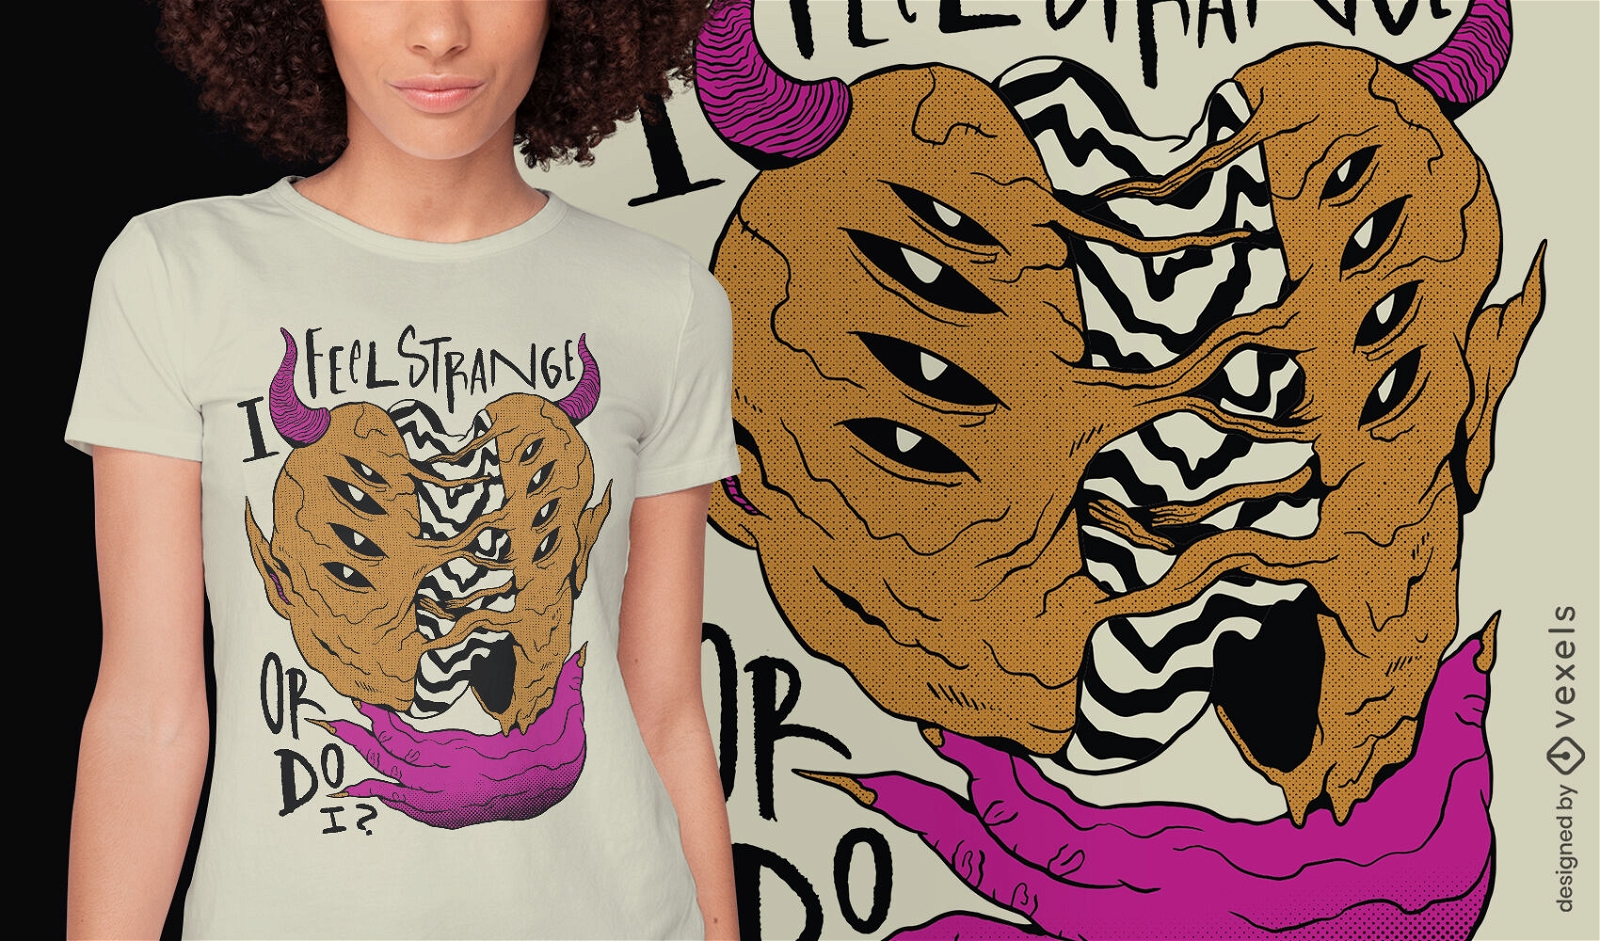 Seltsames Monster-T-Shirt-Design